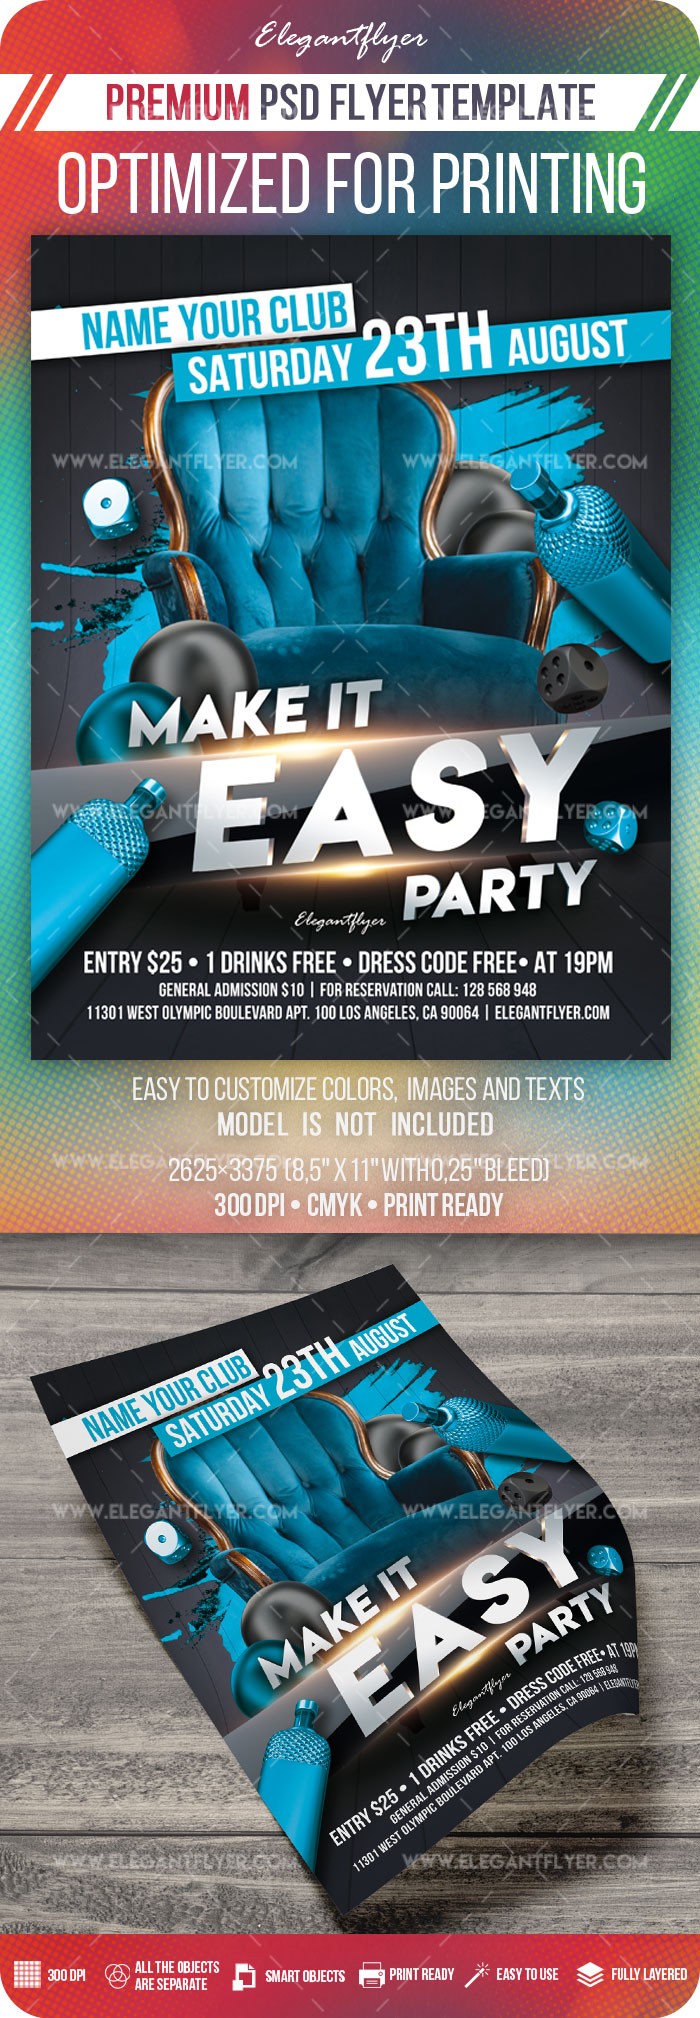 Make it Easy Party by ElegantFlyer